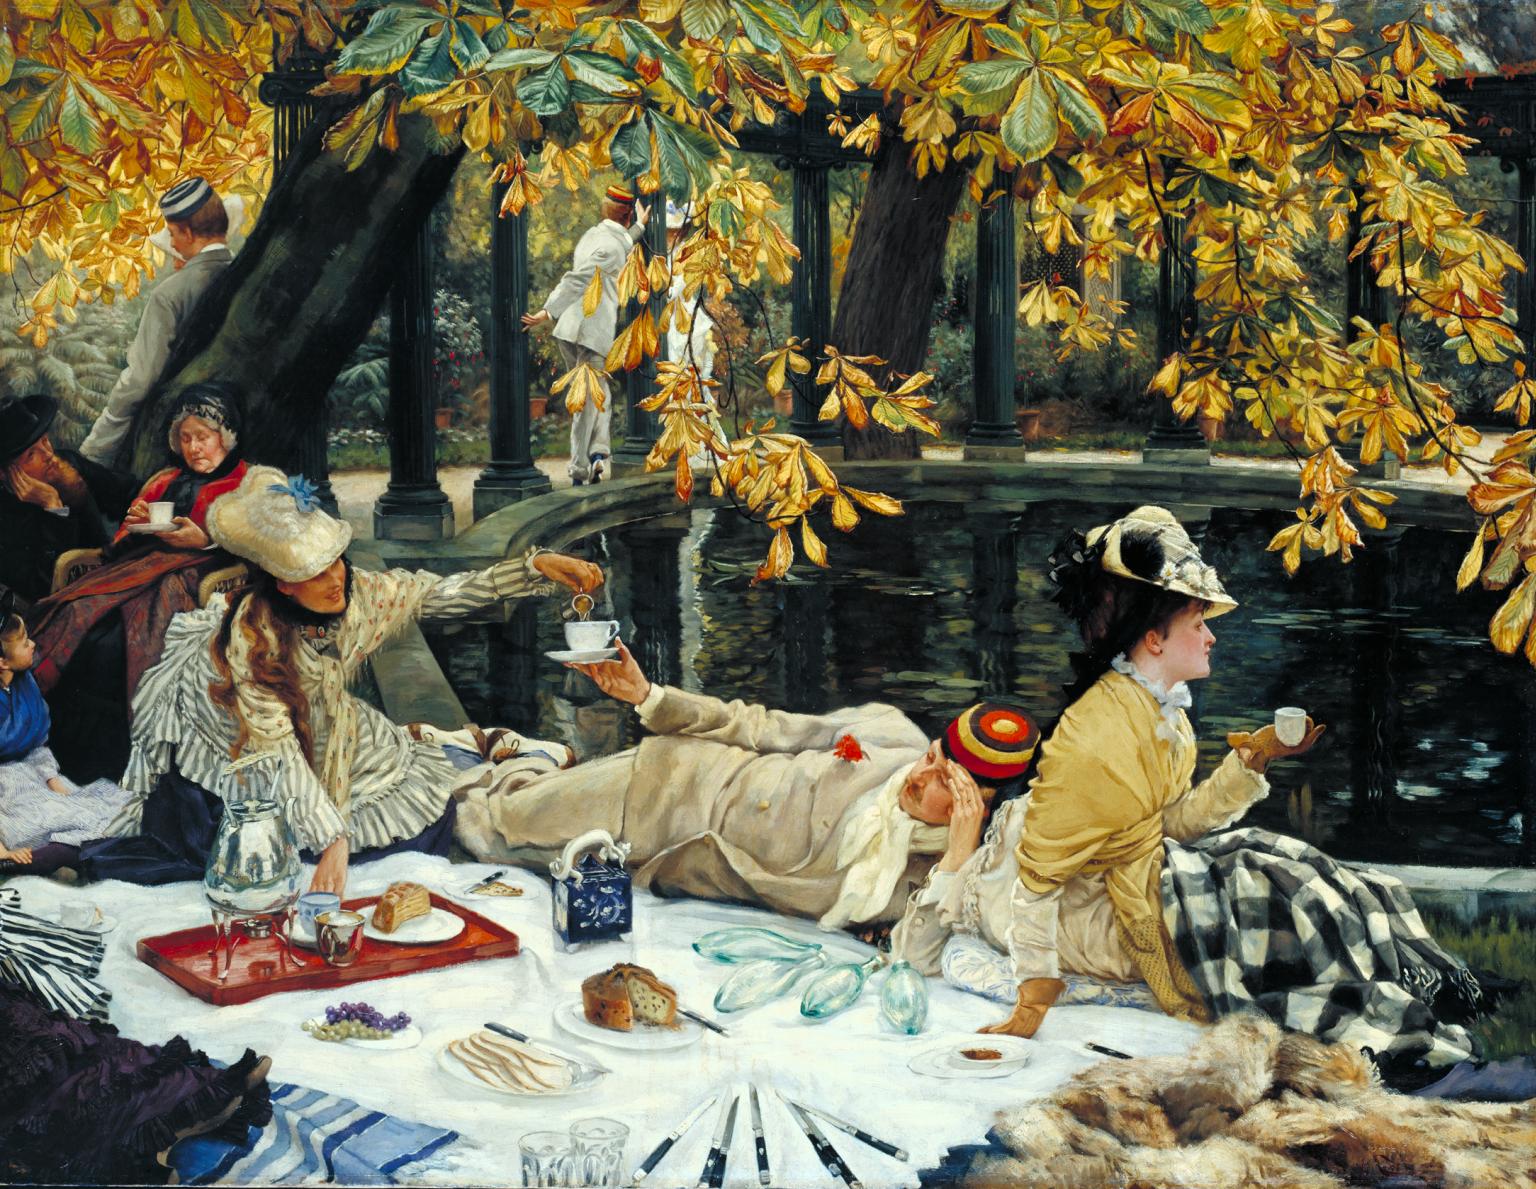 Día Festivo by James Tissot - c. 1876 Tate Modern